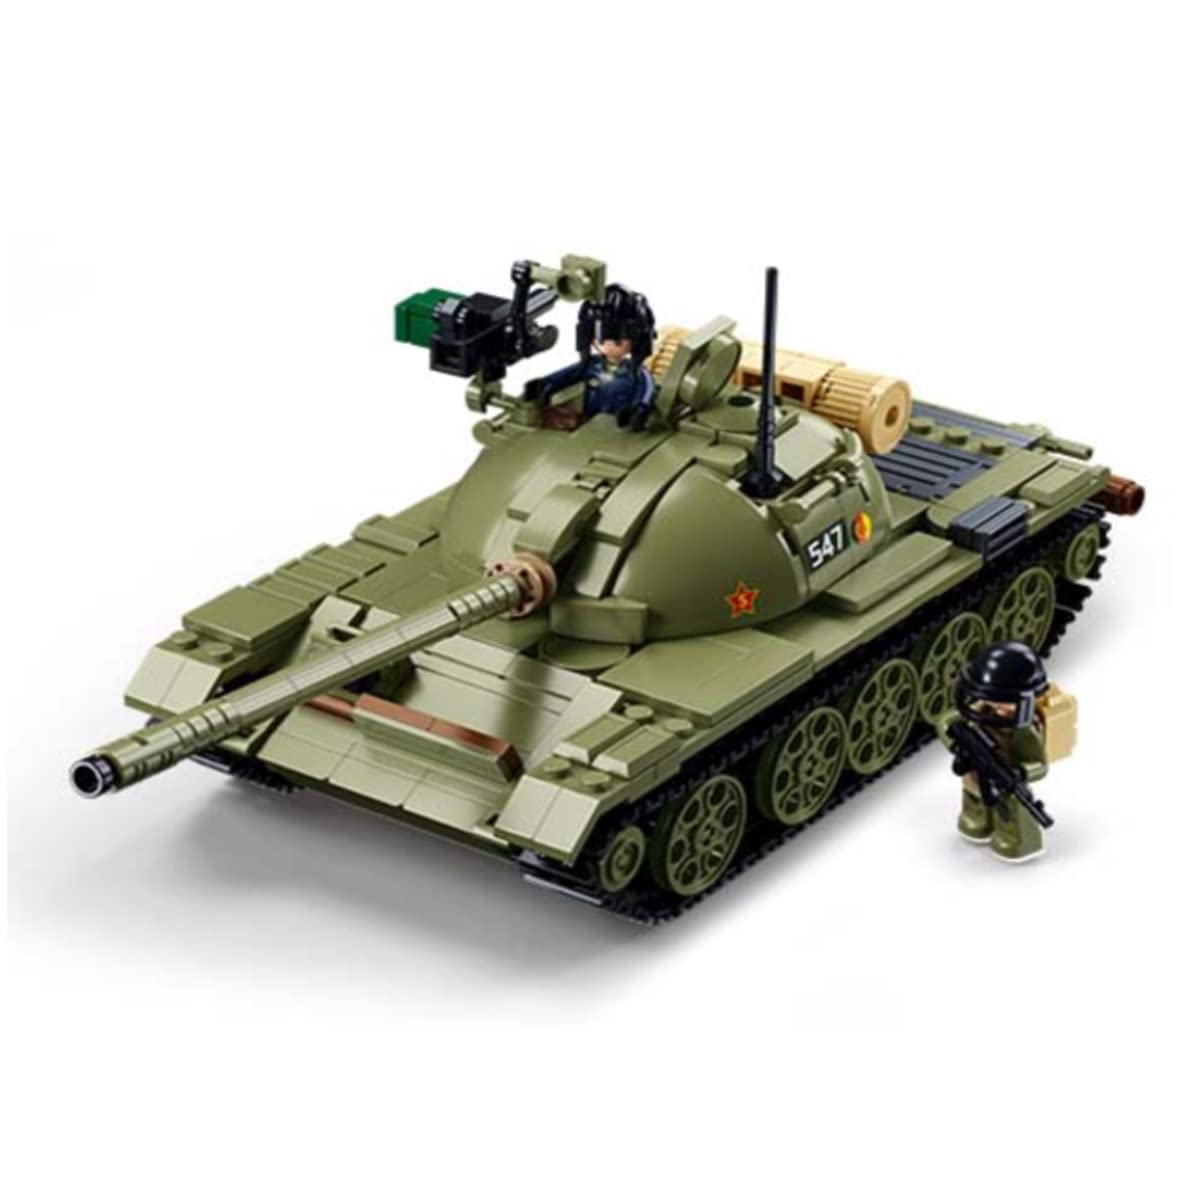 DAHONPA T-54S 中型坦克陆军积木（604 件），二战军事历史收藏模型，带 2 个士兵人物，儿童和成人玩具礼物。 